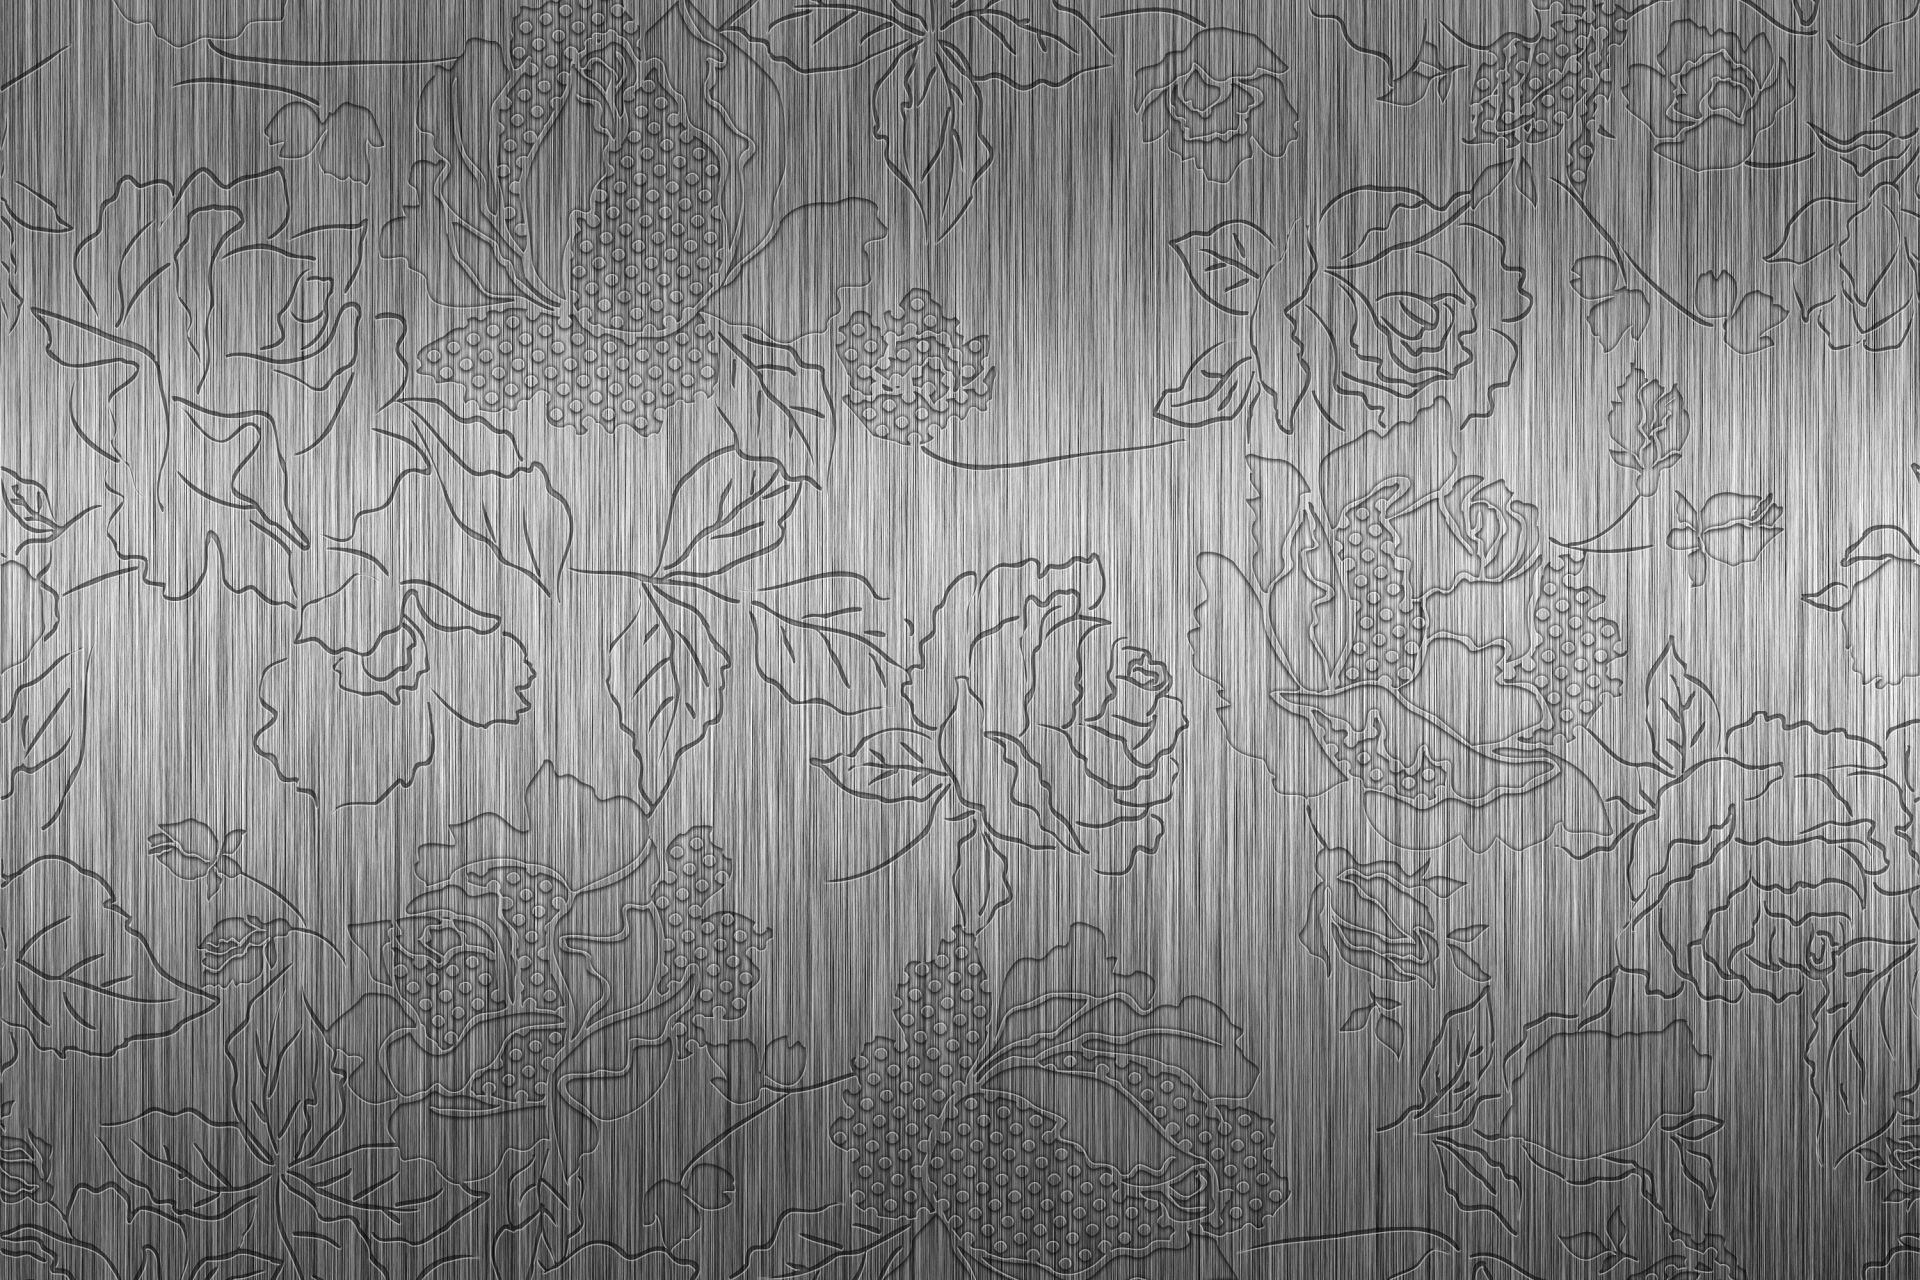 metal pattern design wallpaper retro desktop abstract texture illustration art decoration seamless background vintage graphic element vector fabric paper repetition sketch